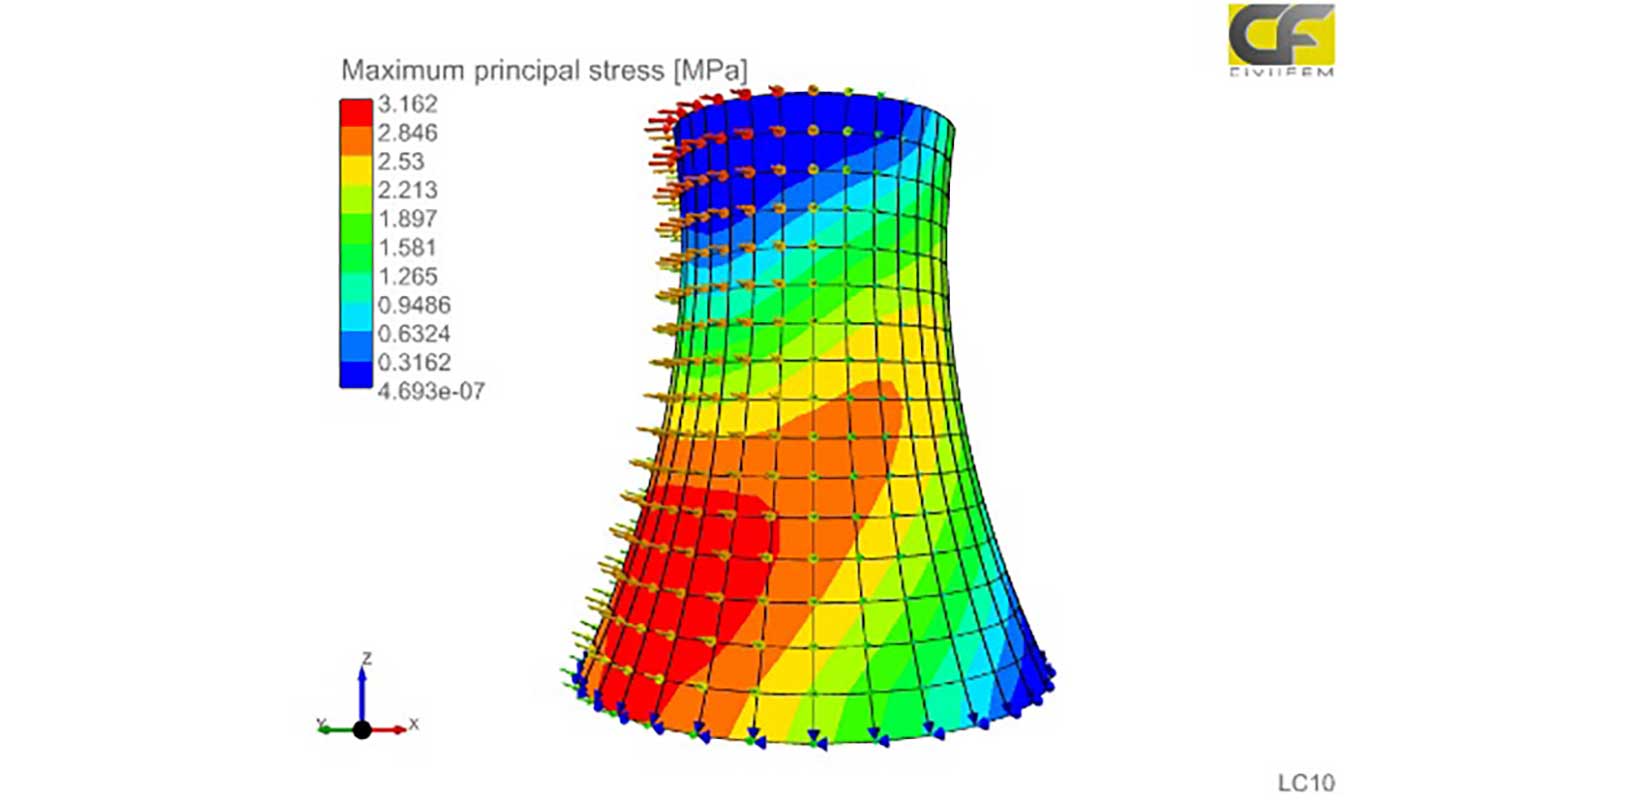 Marcが提供するCivilFEMを使用した原子力発電所の構造解析のためのマルチフィジックスシミュレーション